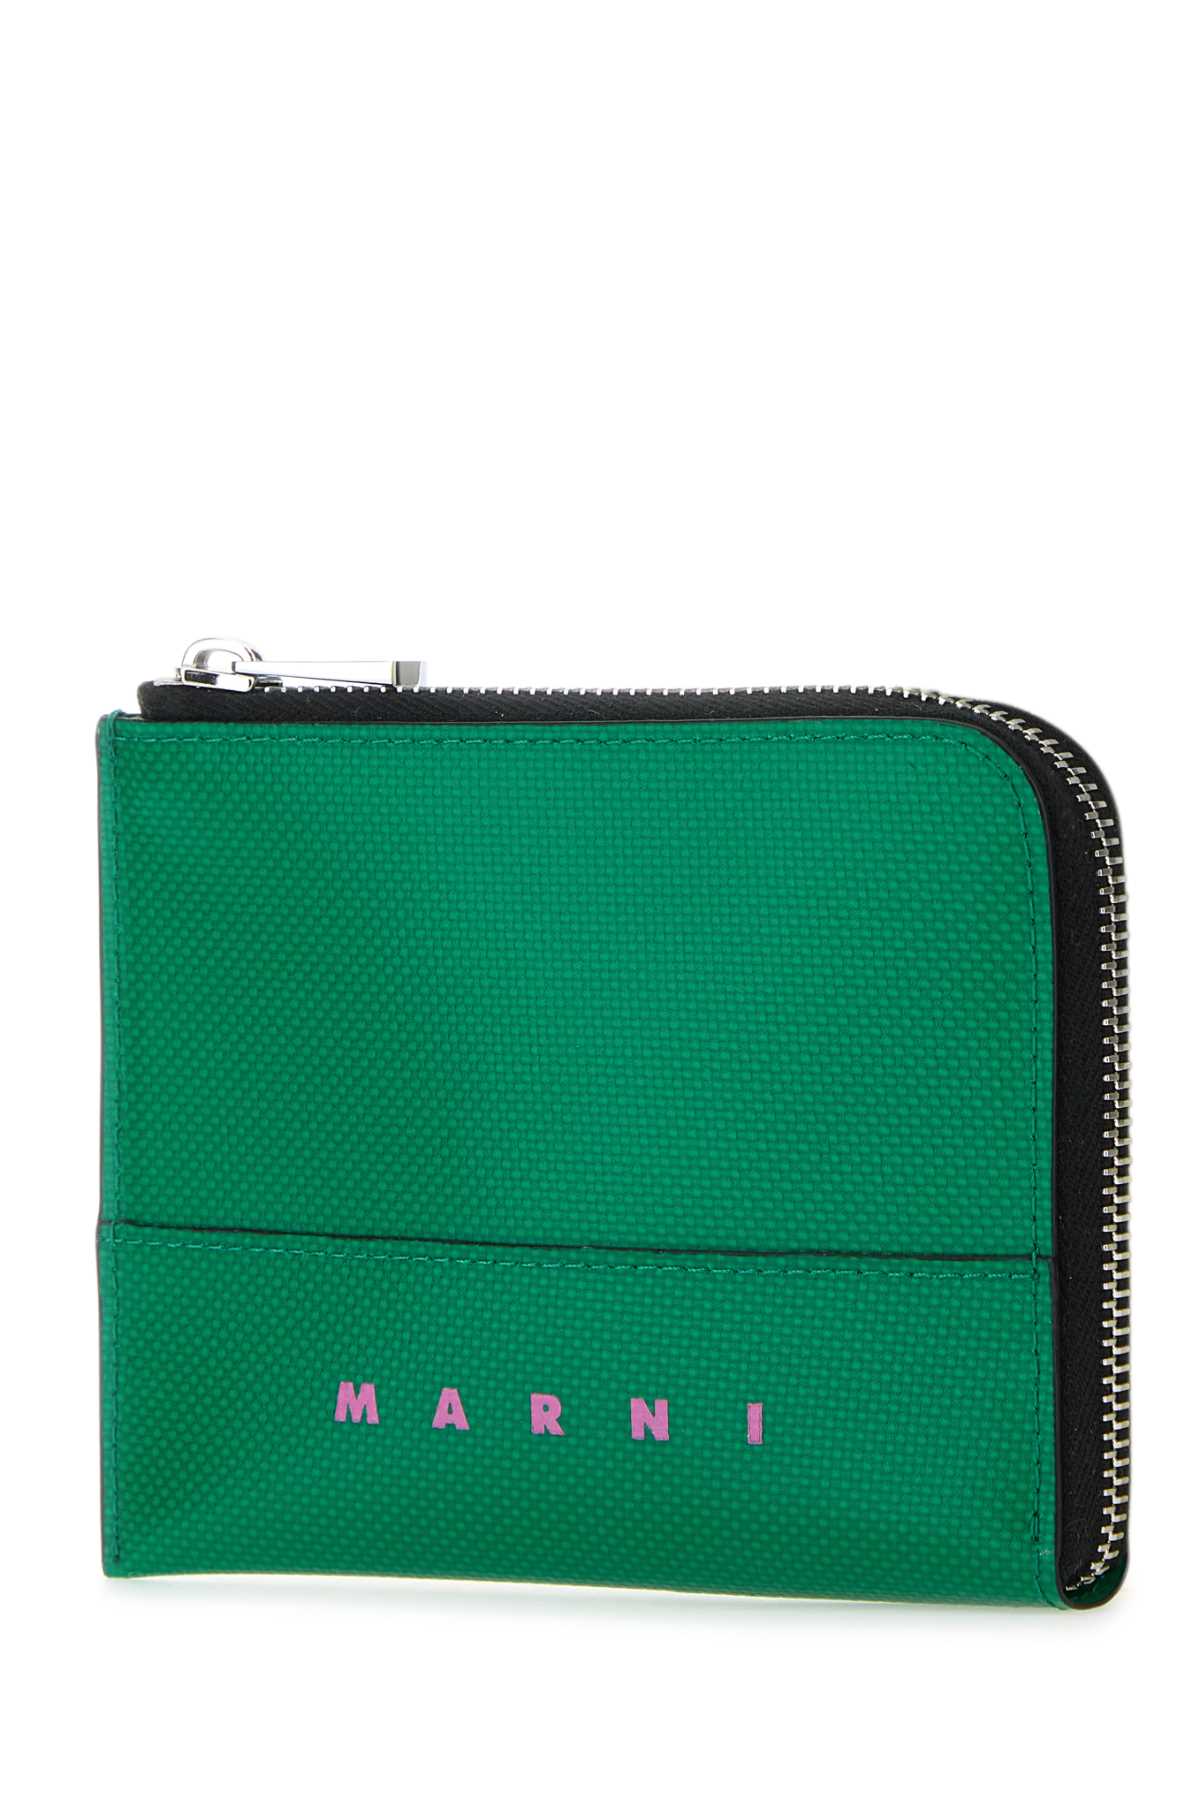 Shop Marni Green Pvc Wallet In Seagreen